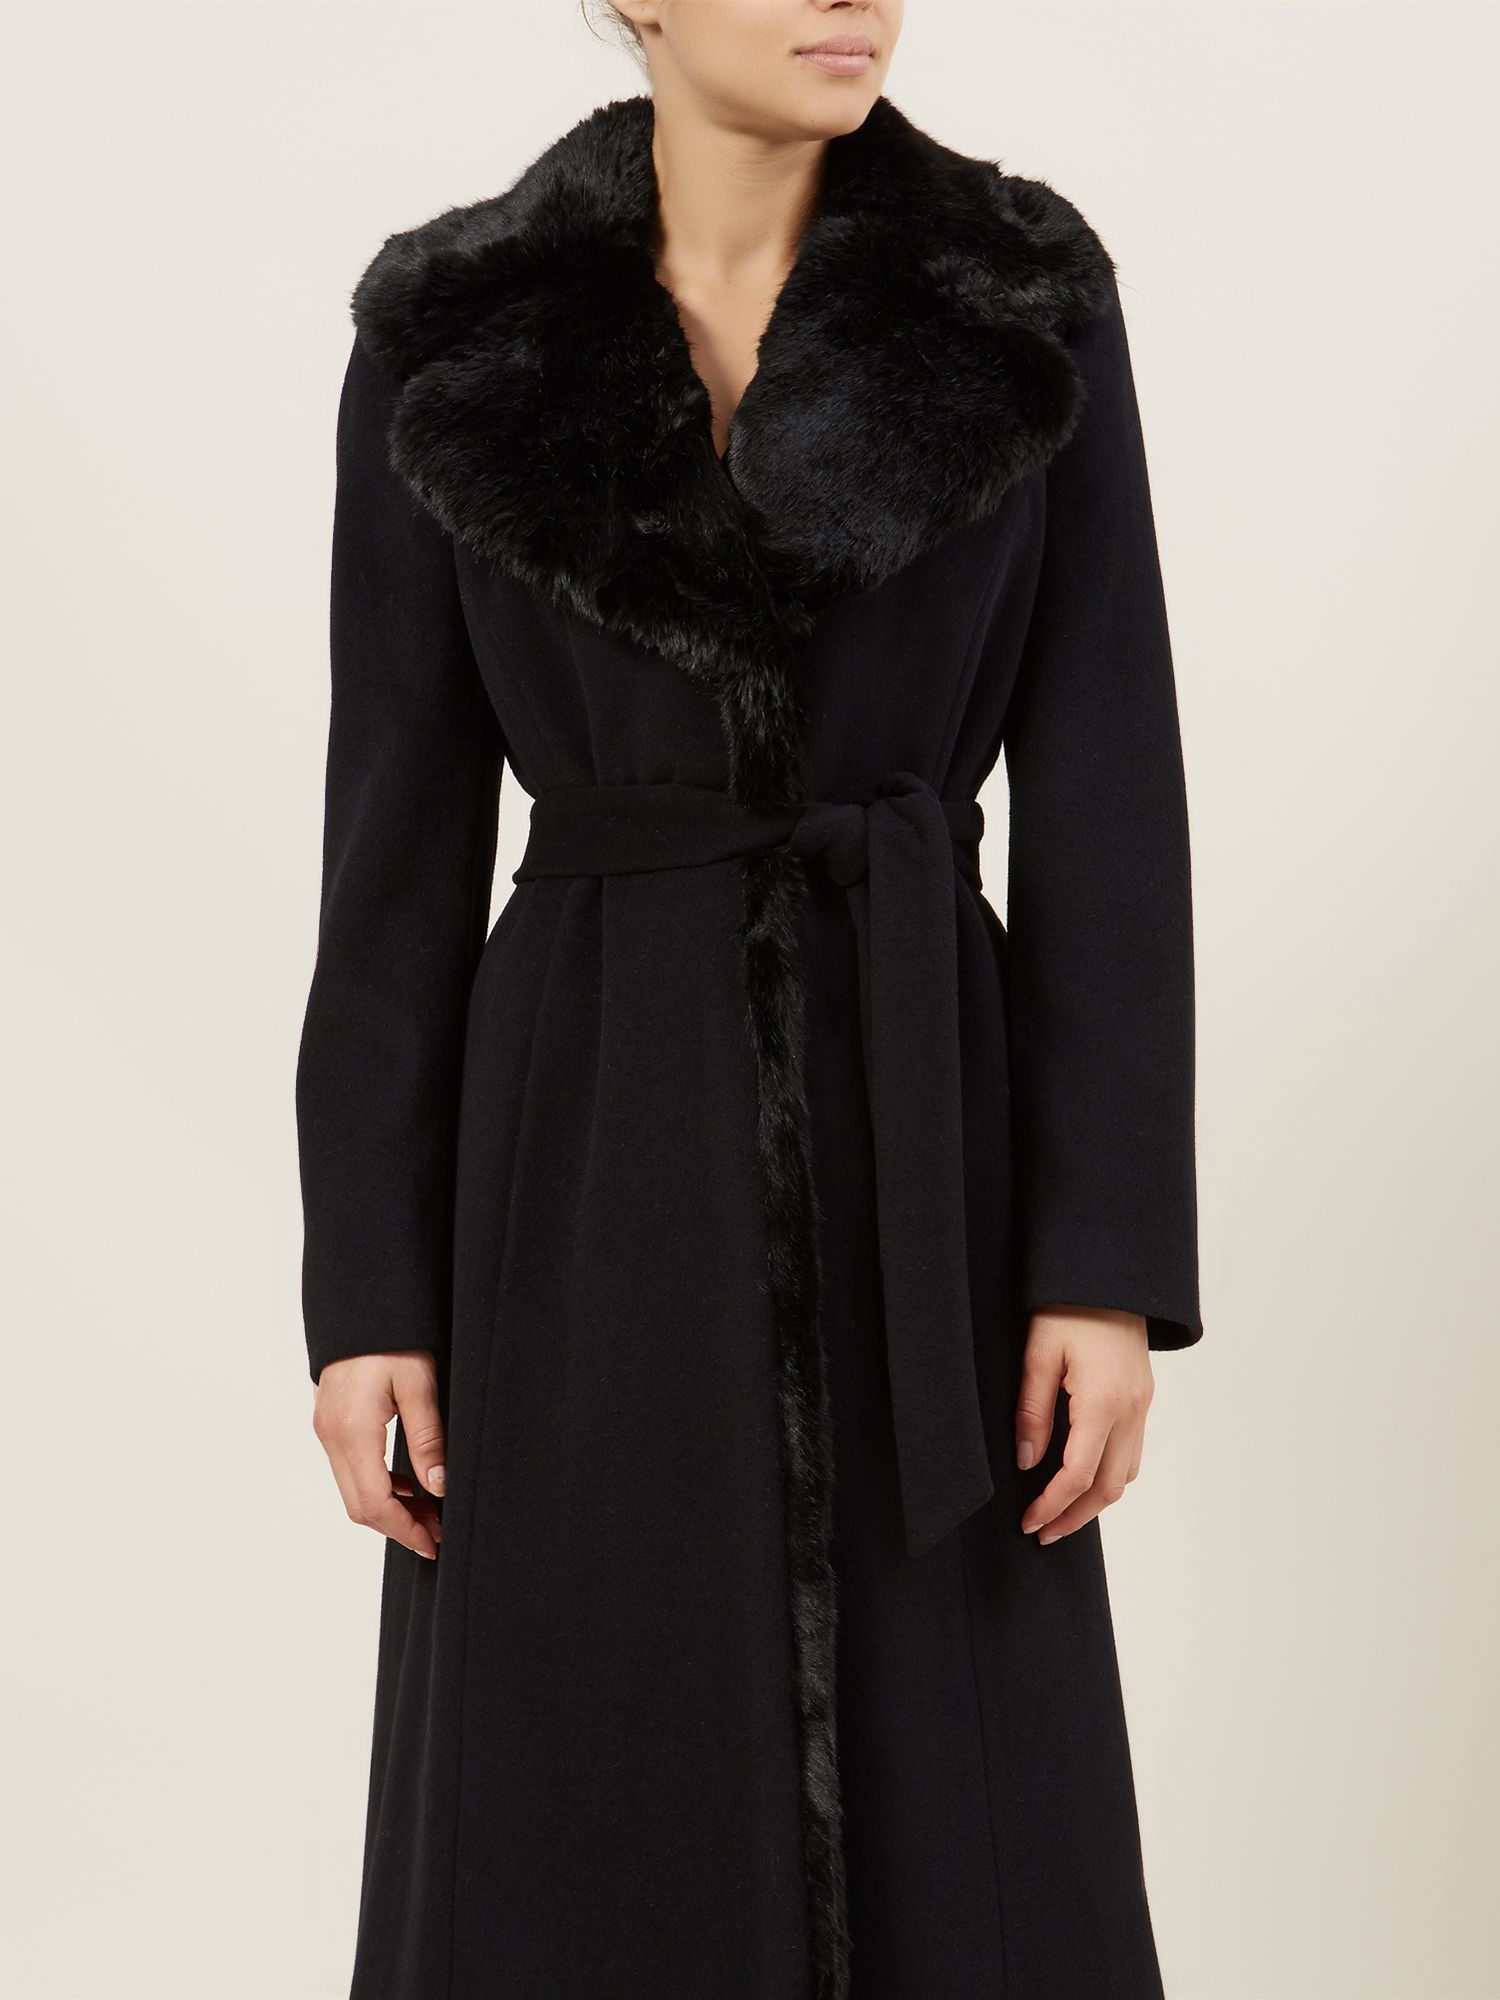 Jacques Vert Long Faux Fur Collar Wrap Coat, Black at John Lewis & Partners